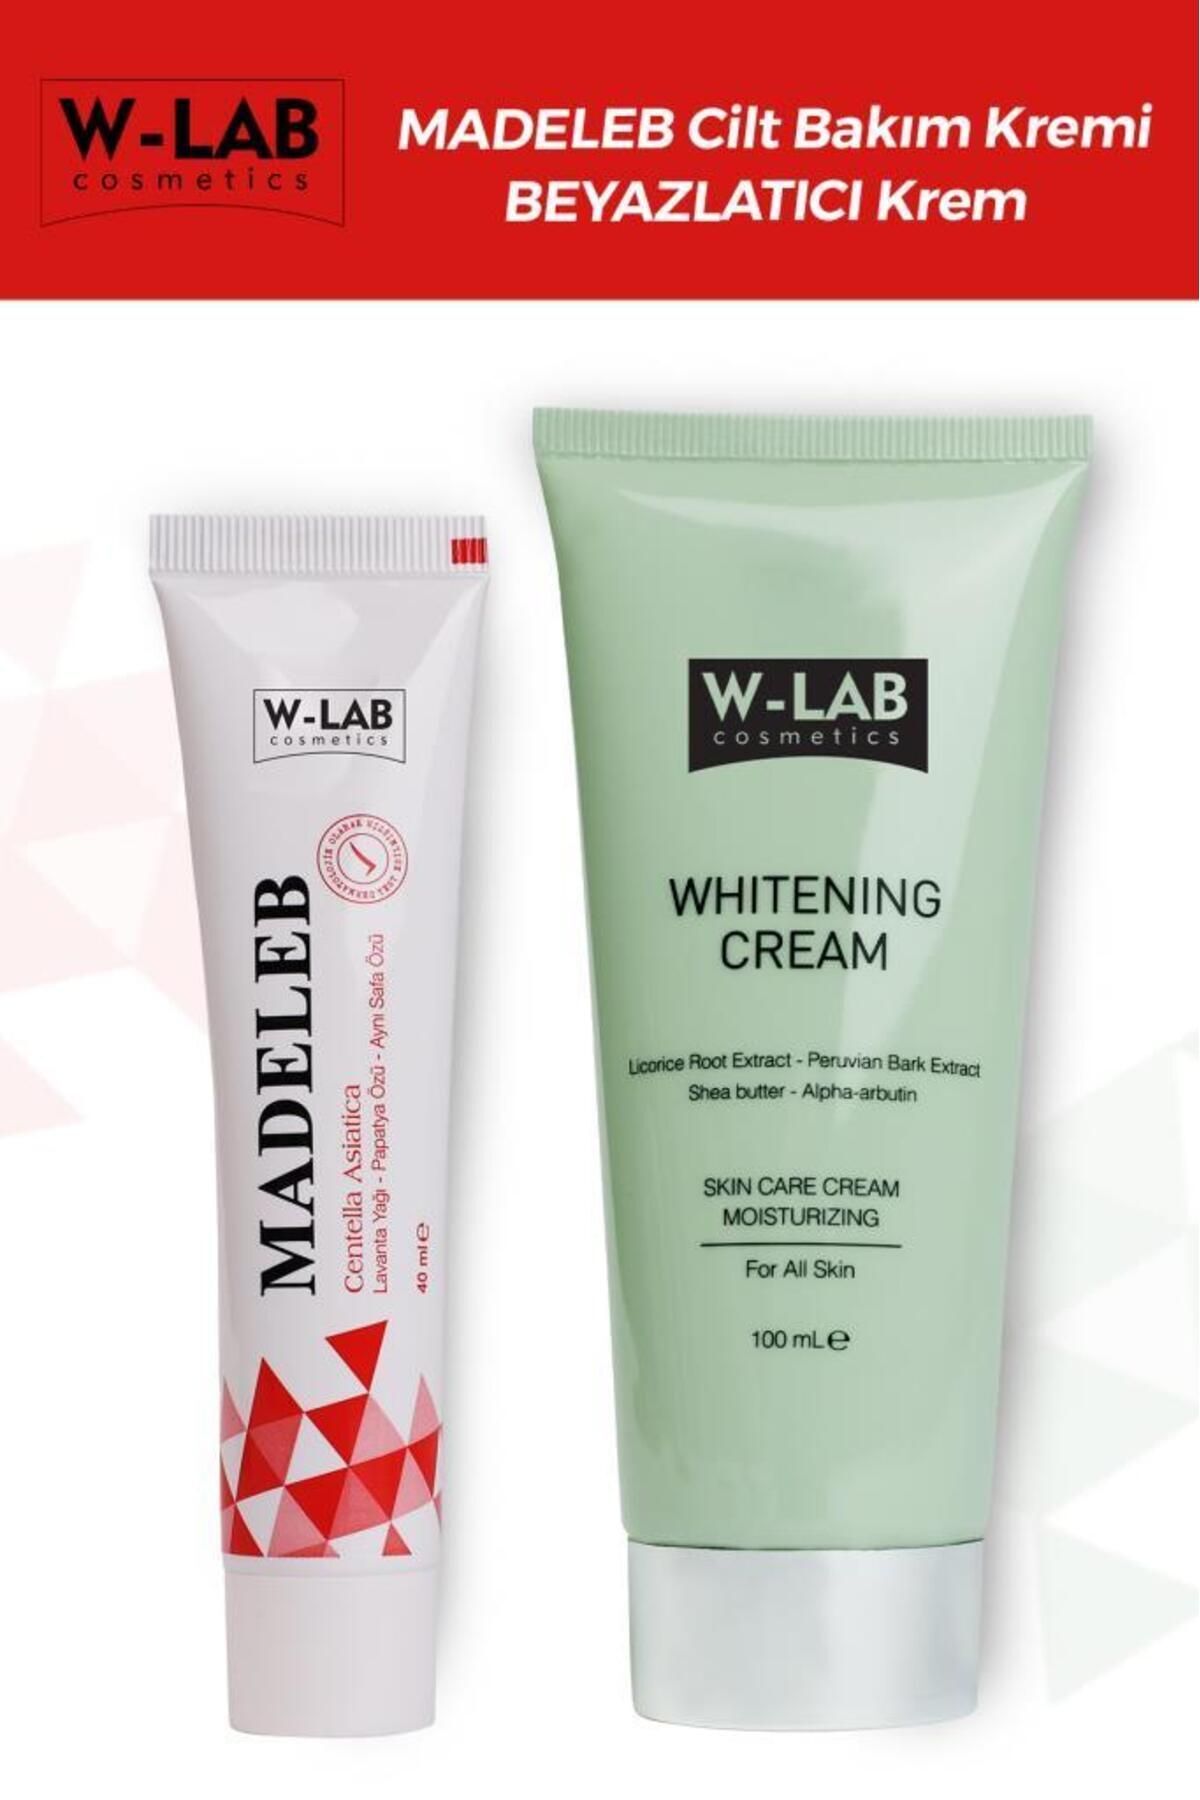 W-Lab Kozmetik W-lab Beyazlatıcı Krem 100 ml Ve Madeleb Krem 40 ml Set